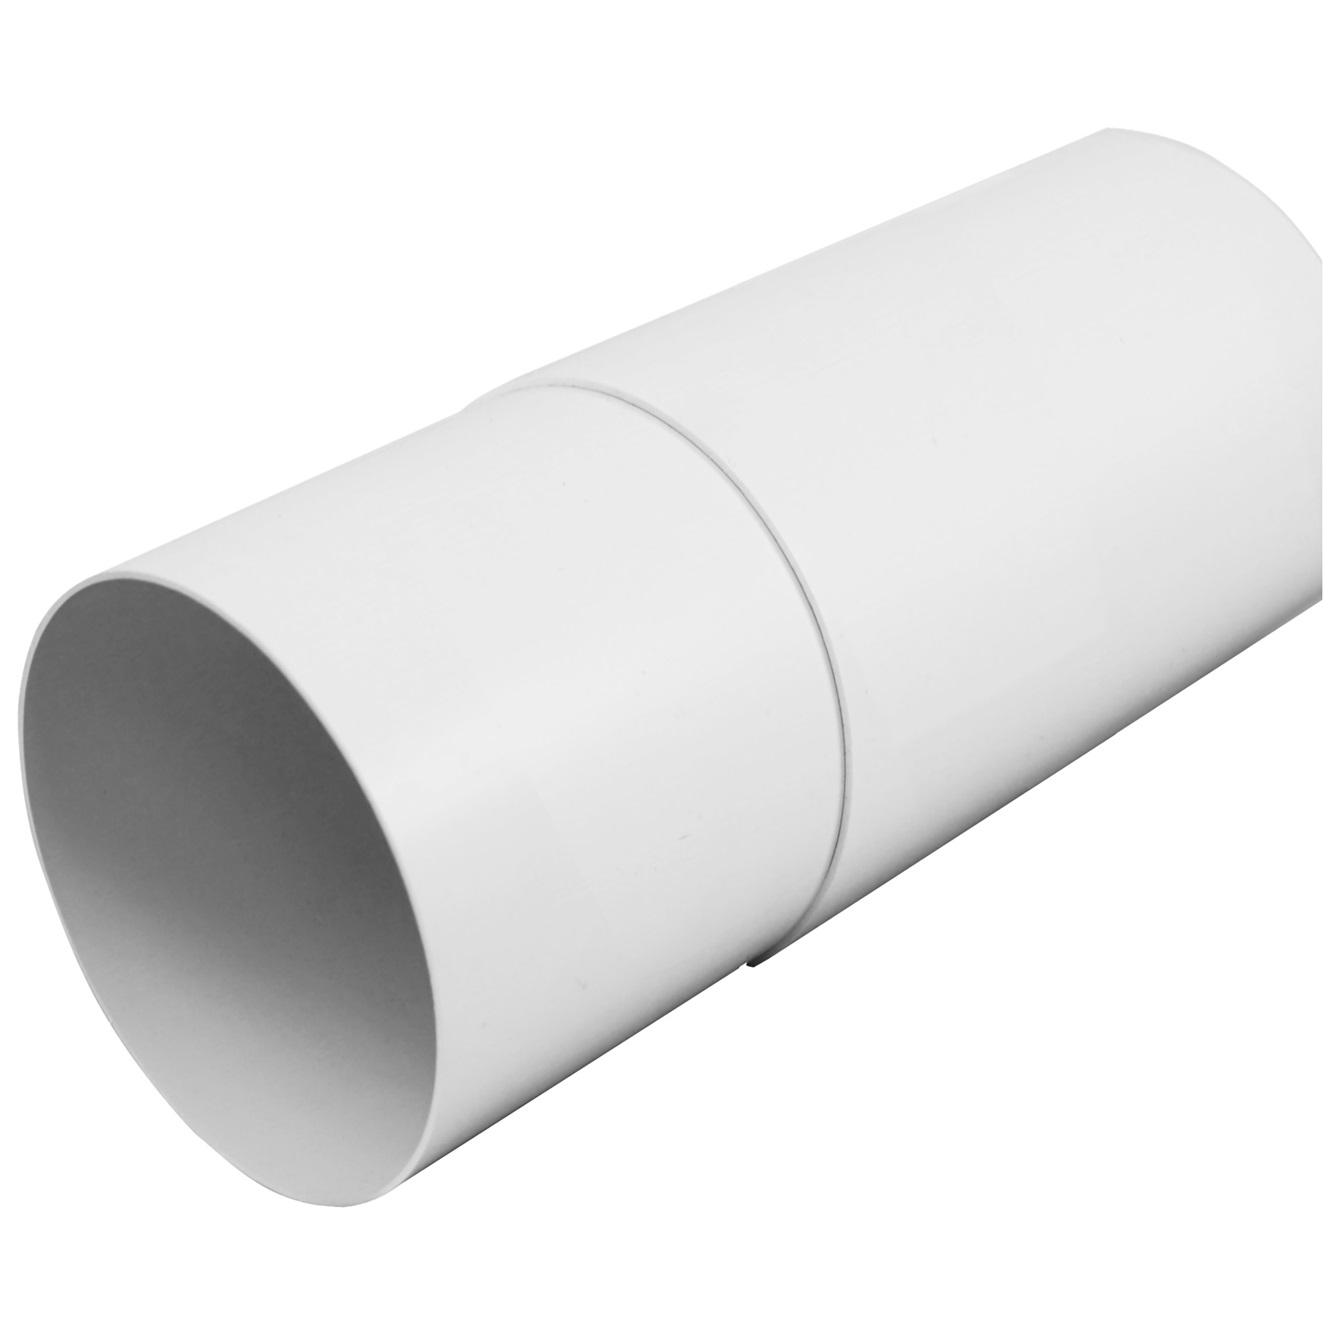 telescopic round duct, Ø150mm, 300-500mm